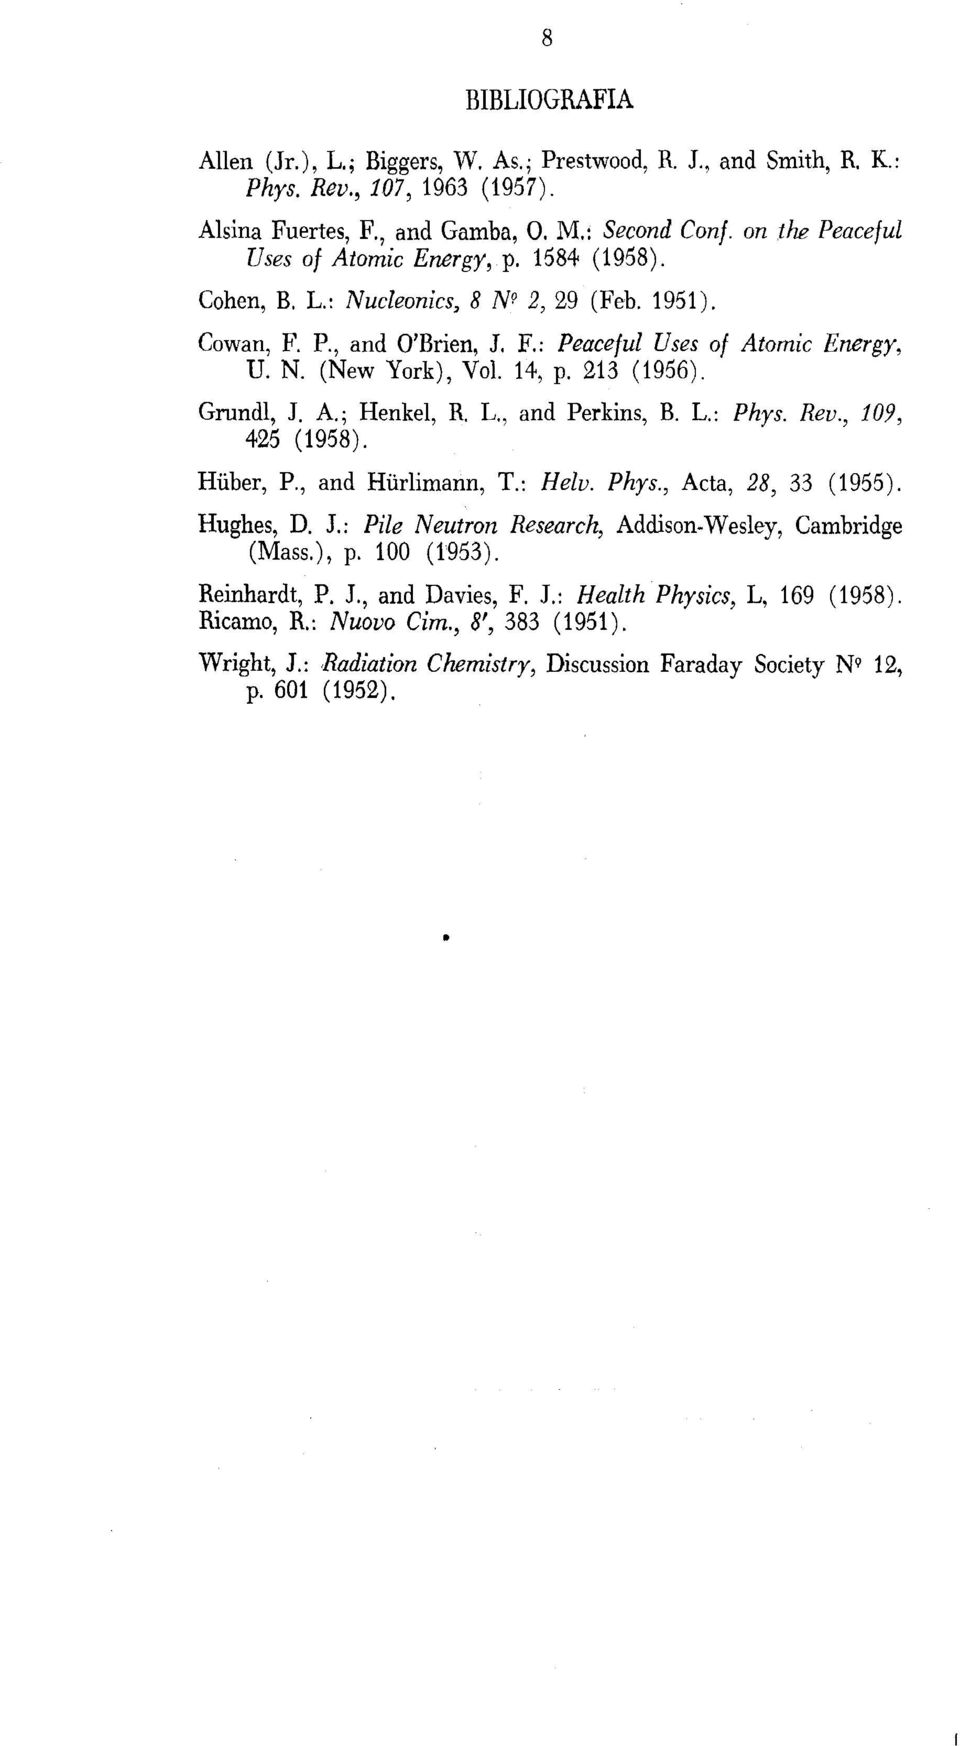 14, p. 213 (1956). Energy, Grundl, J. A.; Henkel, R. L,, and Perkins, B. L.: Phys. Rev., 109, 425 (1958). Hüber, P., and Hürlimann, T.: Helv. Phys., Acta, 28, 33 (1955). Hughes, D. J.: Pile Neutrón (Mass.